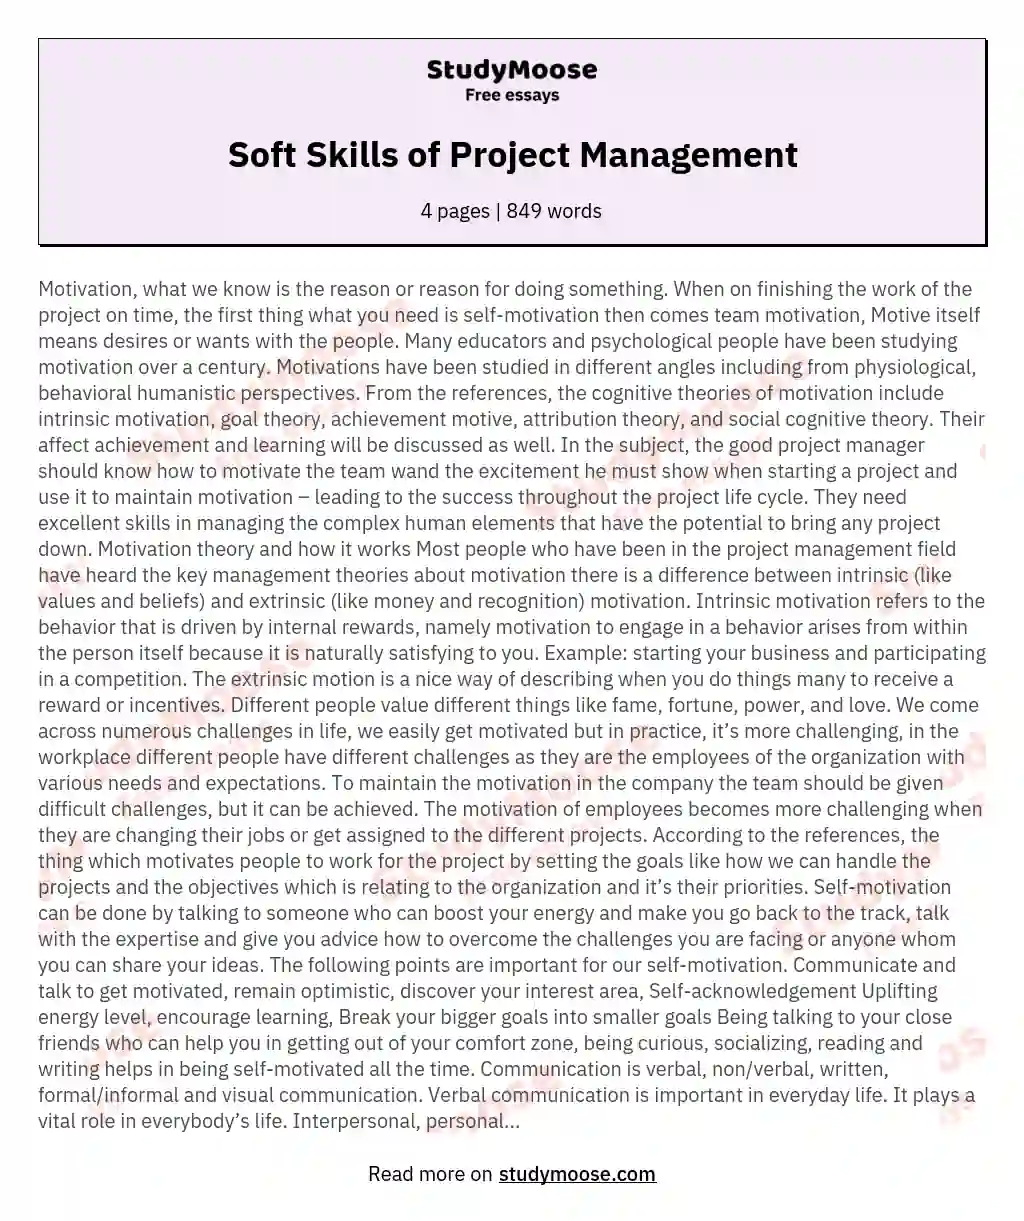 Soft Skills of Project Management essay